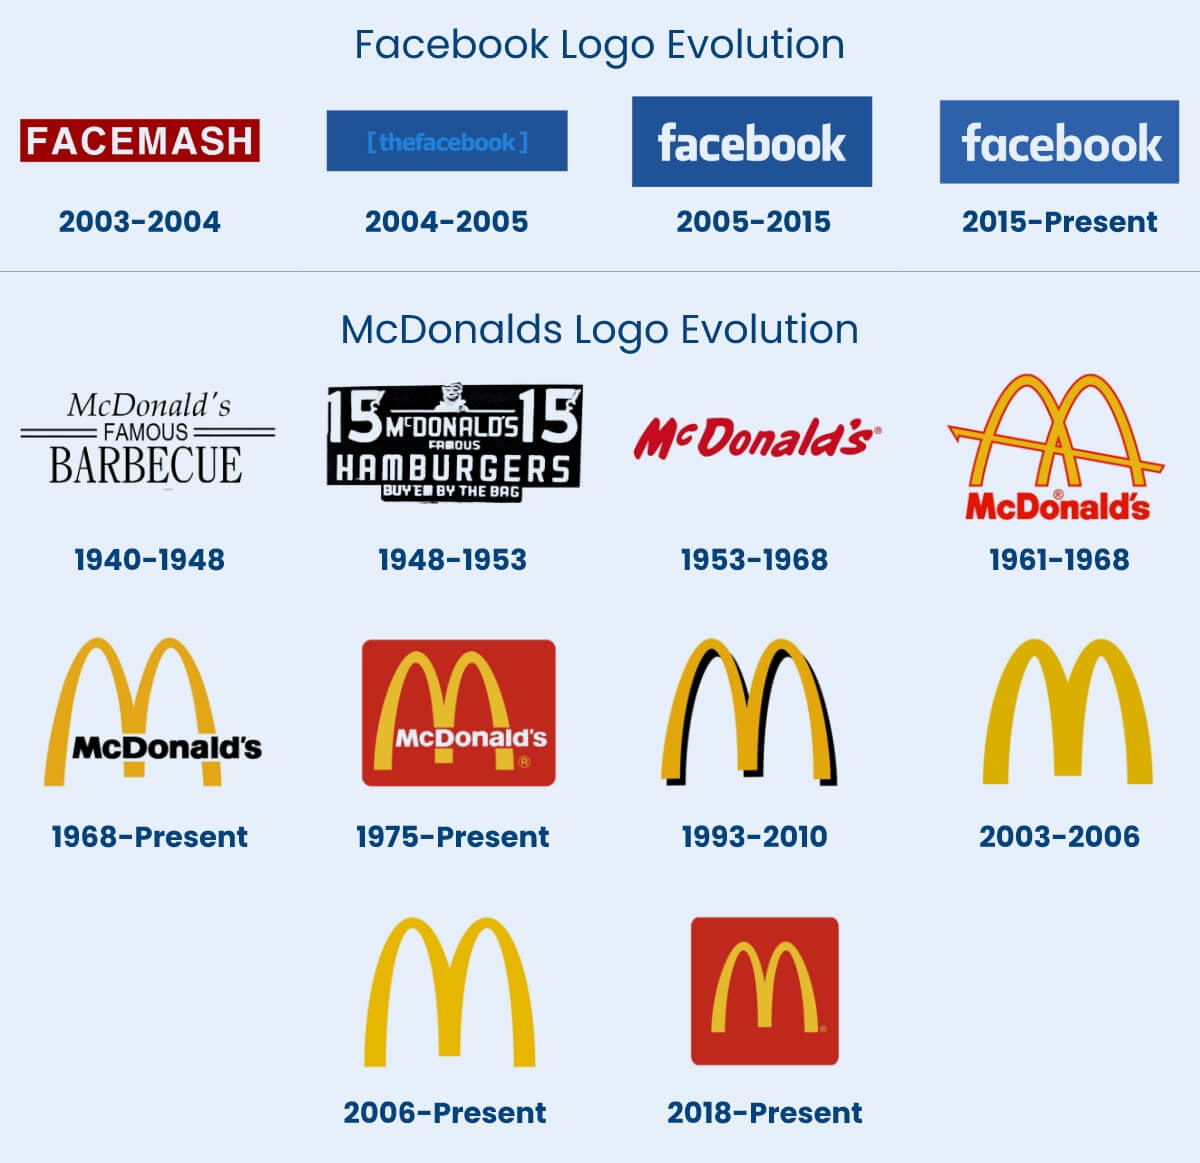 facebook & McDonalds Logo Evolution